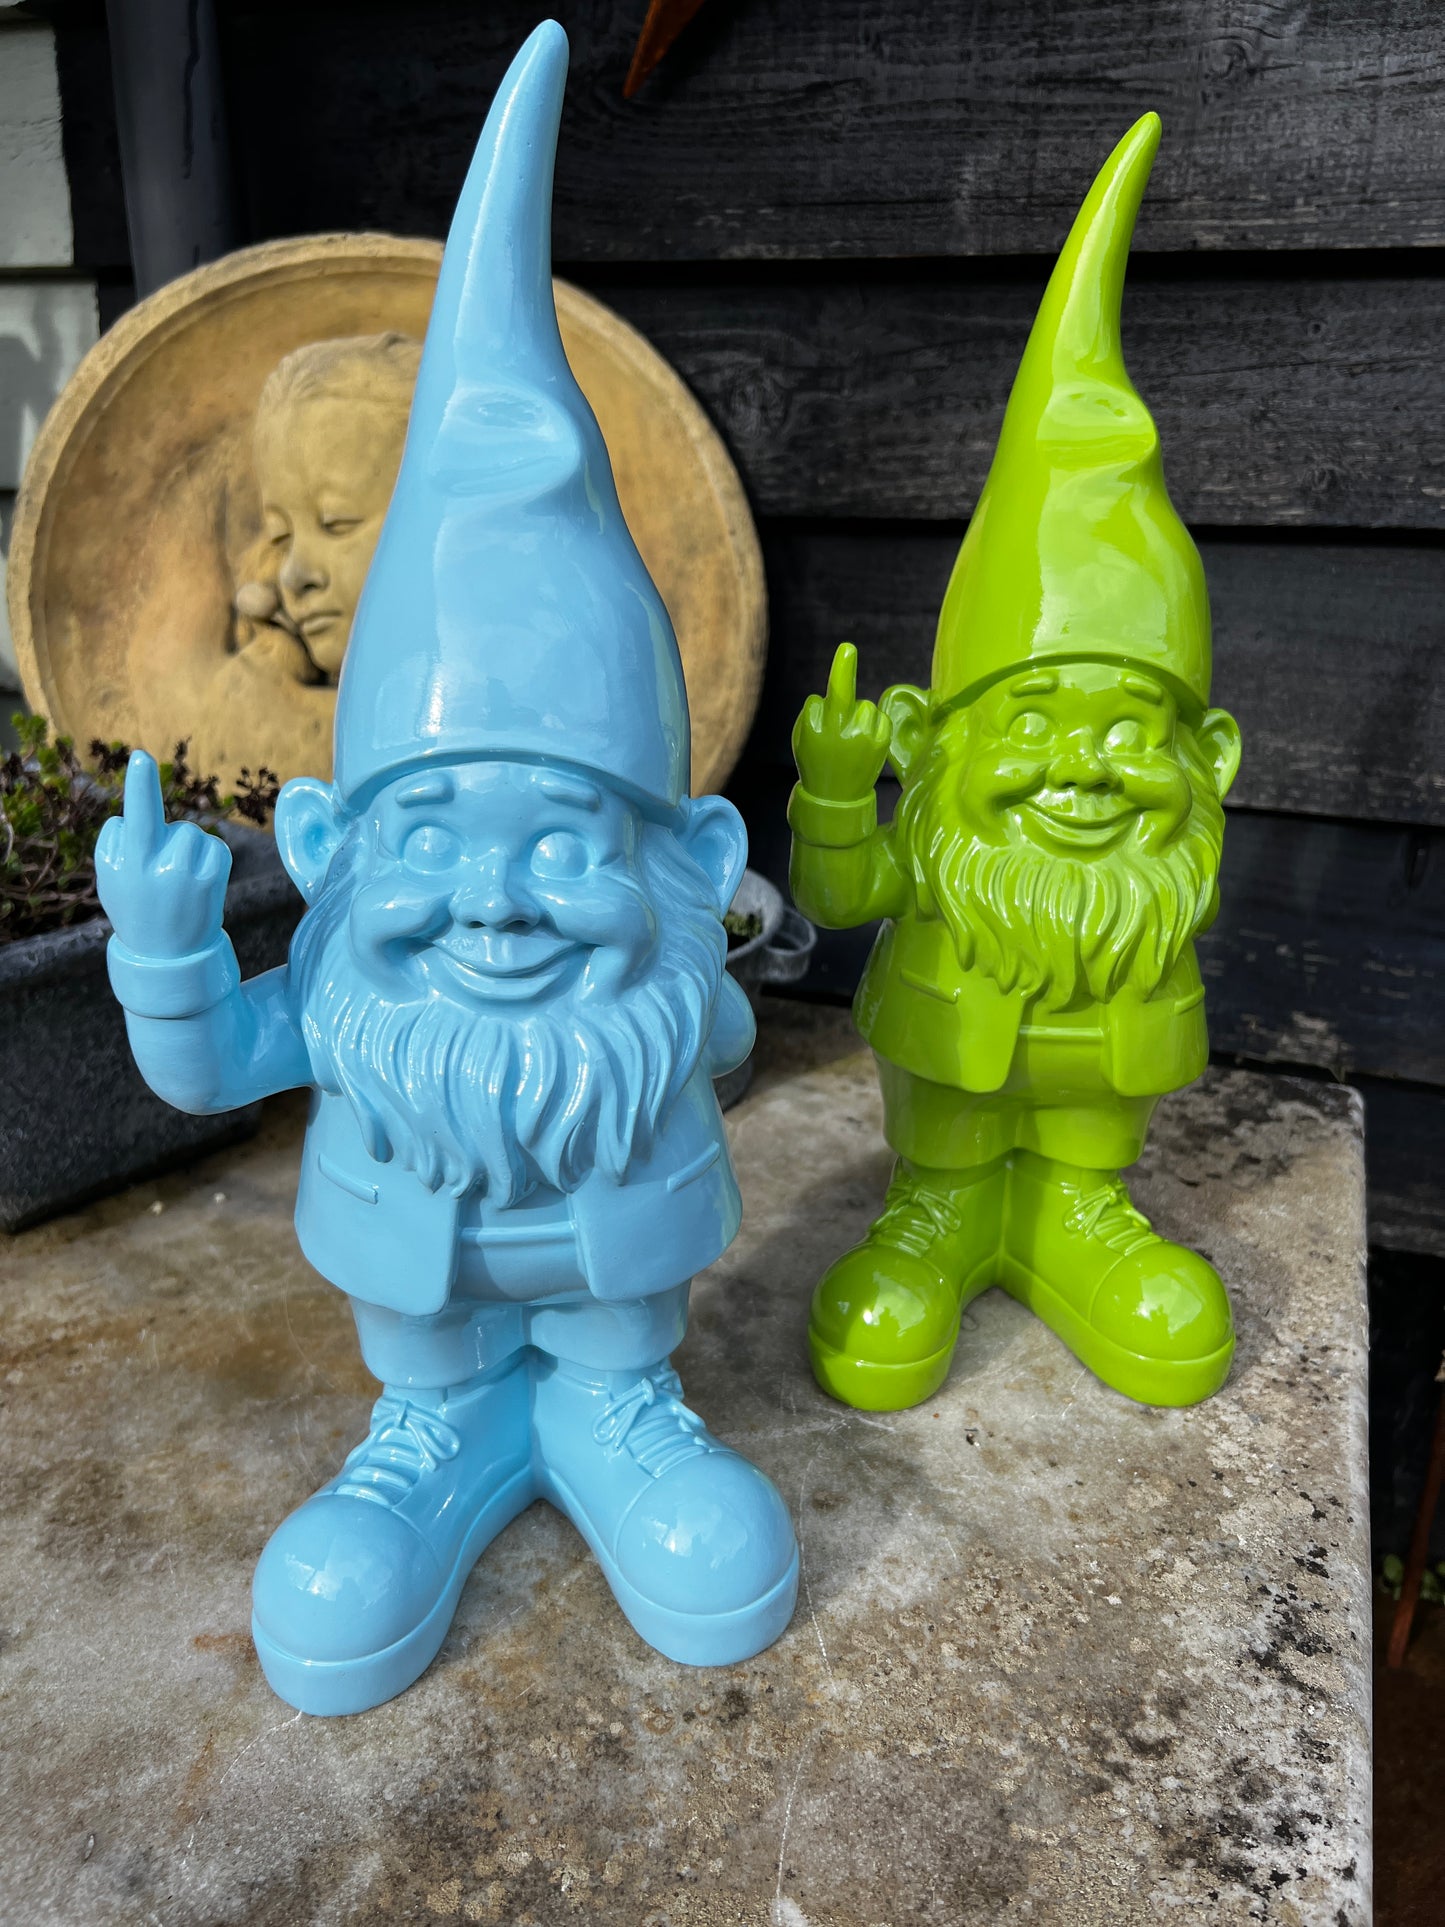 Naughty Gnome - Bright Blue